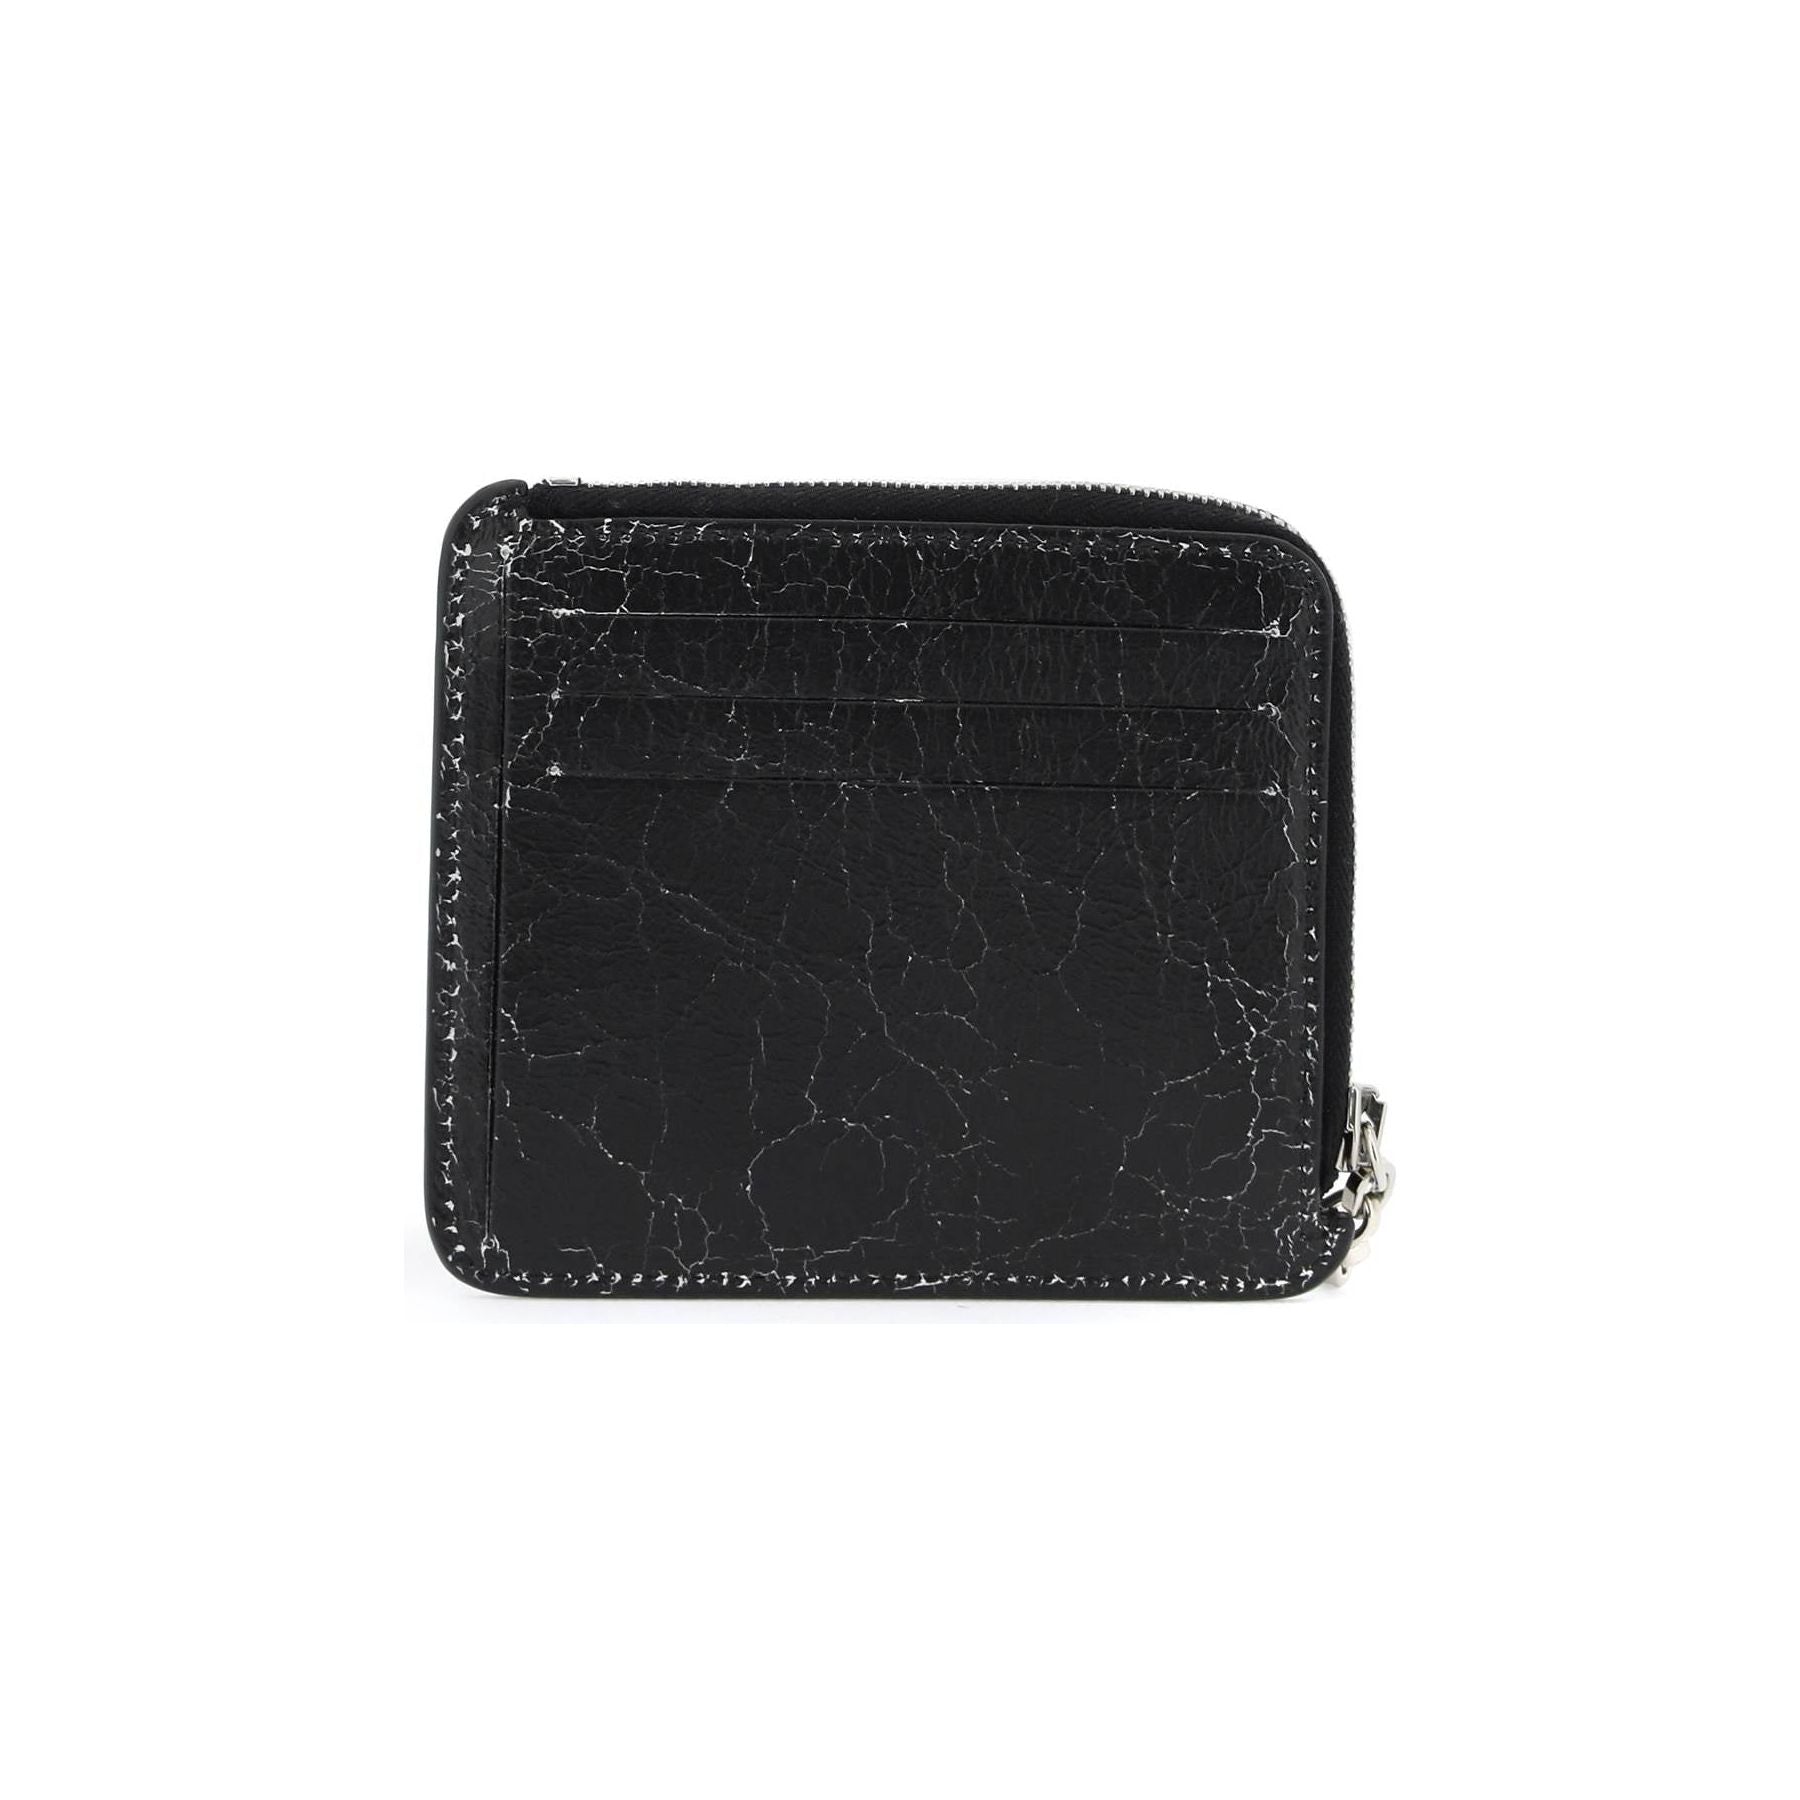 Cracked Leather Zip Wallet